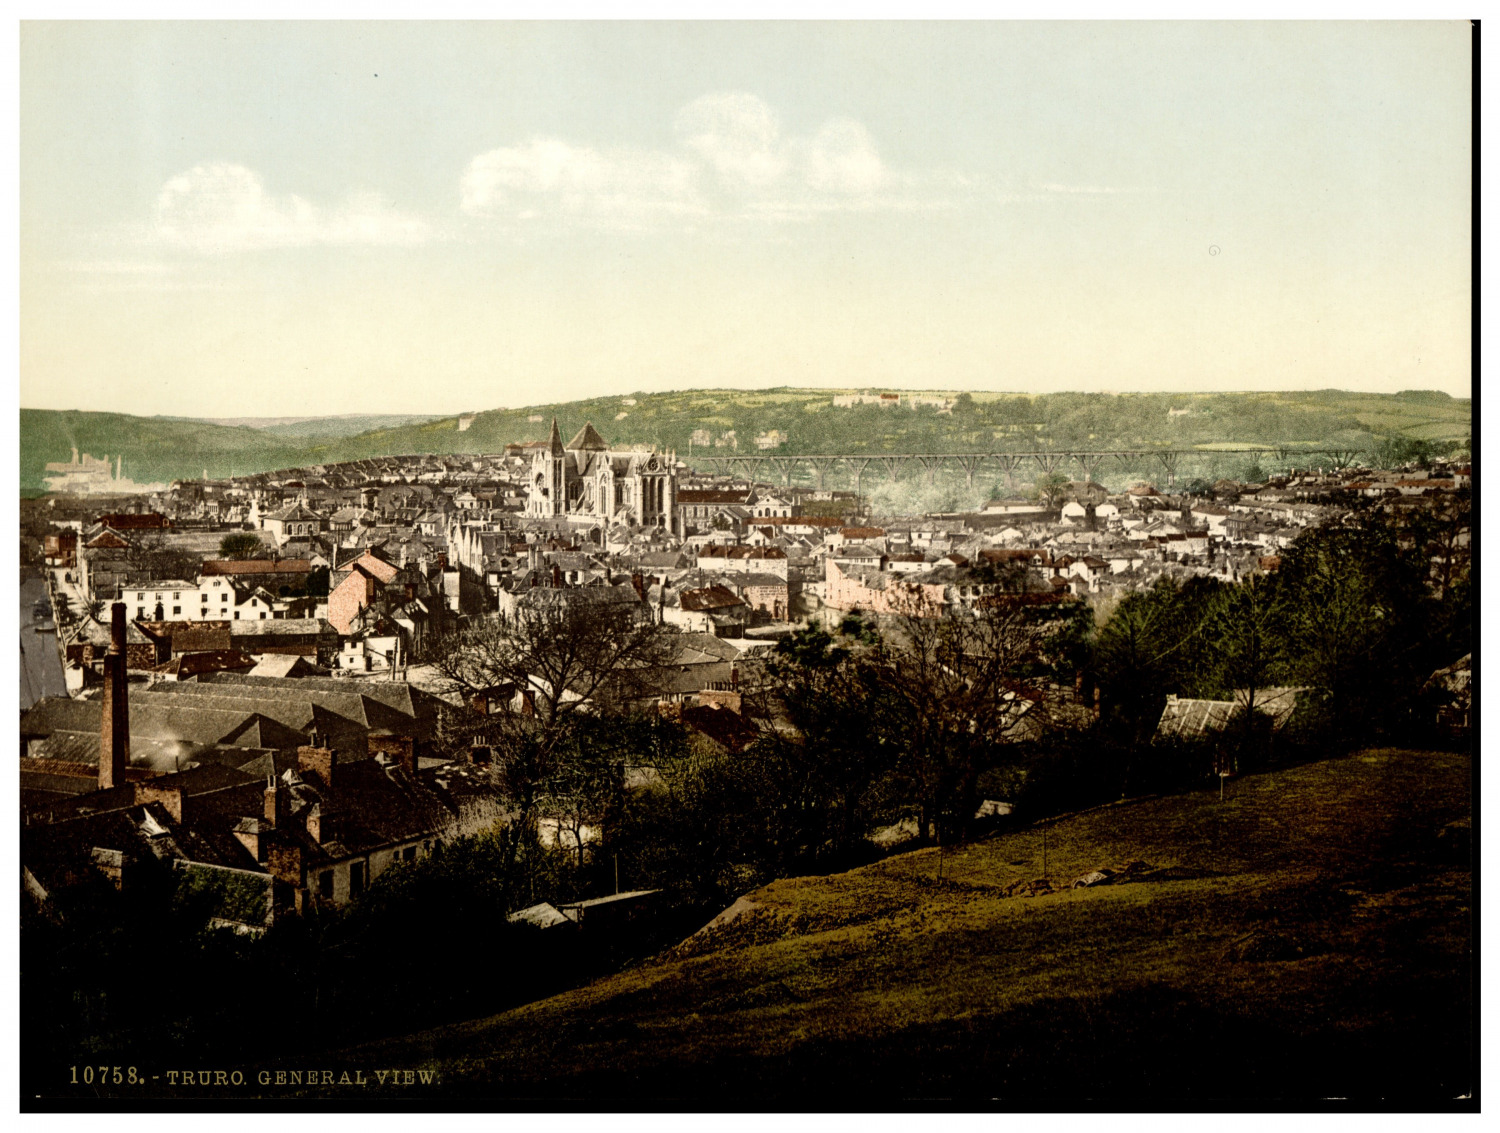 Cornwall. Truro. General View. Vintage photochrome by P.Z, photochrome Zurich ph